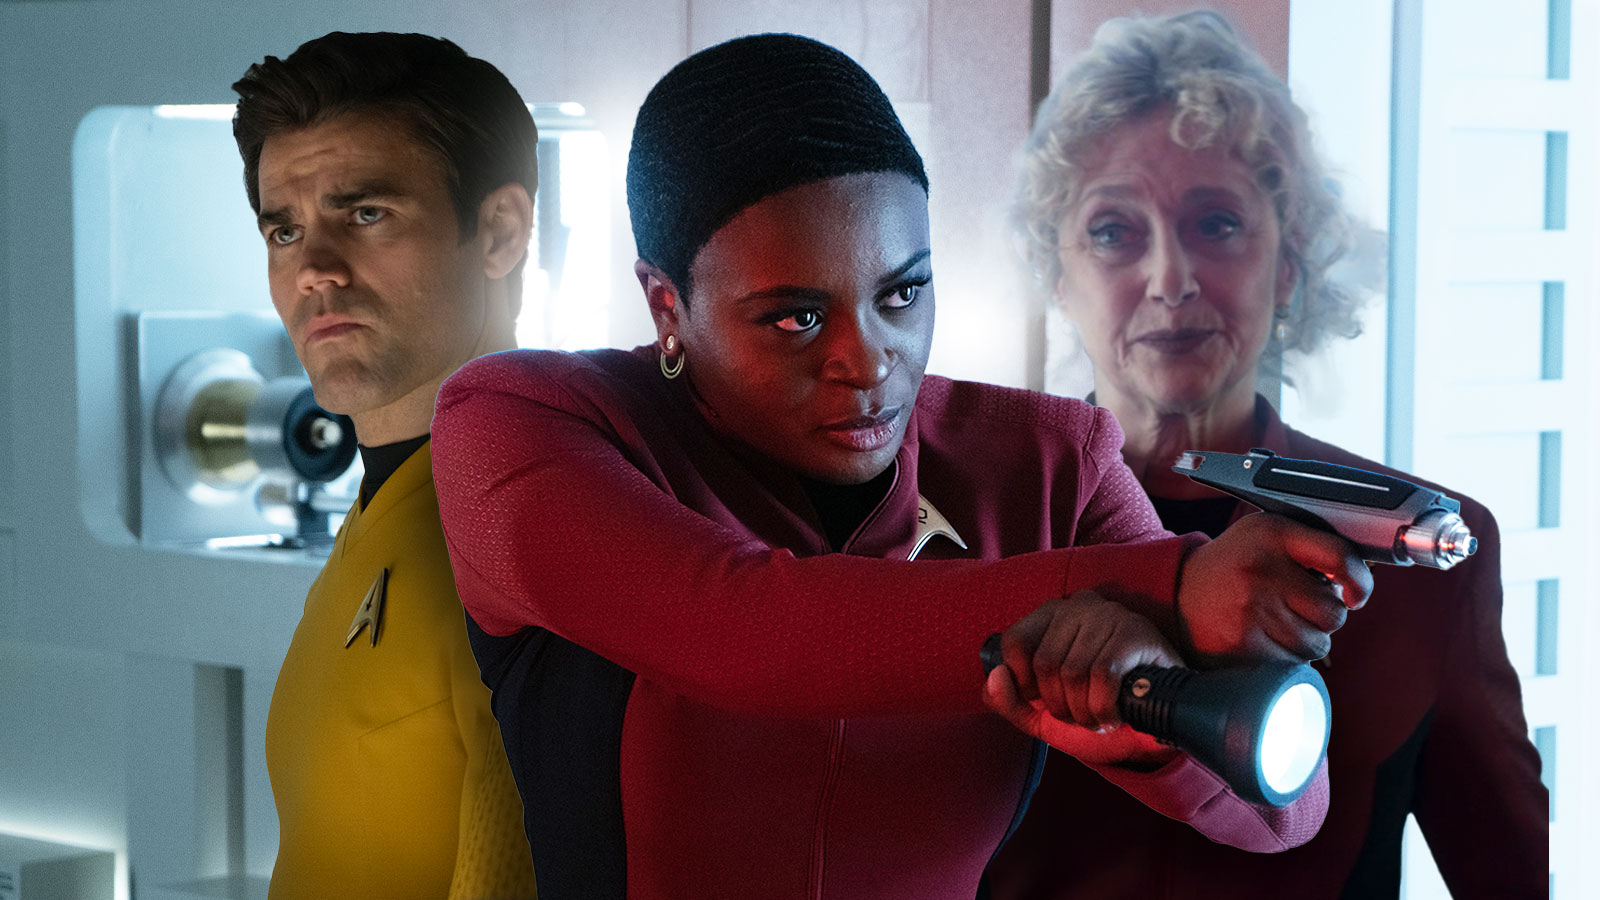 Star Trek: Strange New Worlds “Lost in Translation” preview + new photos